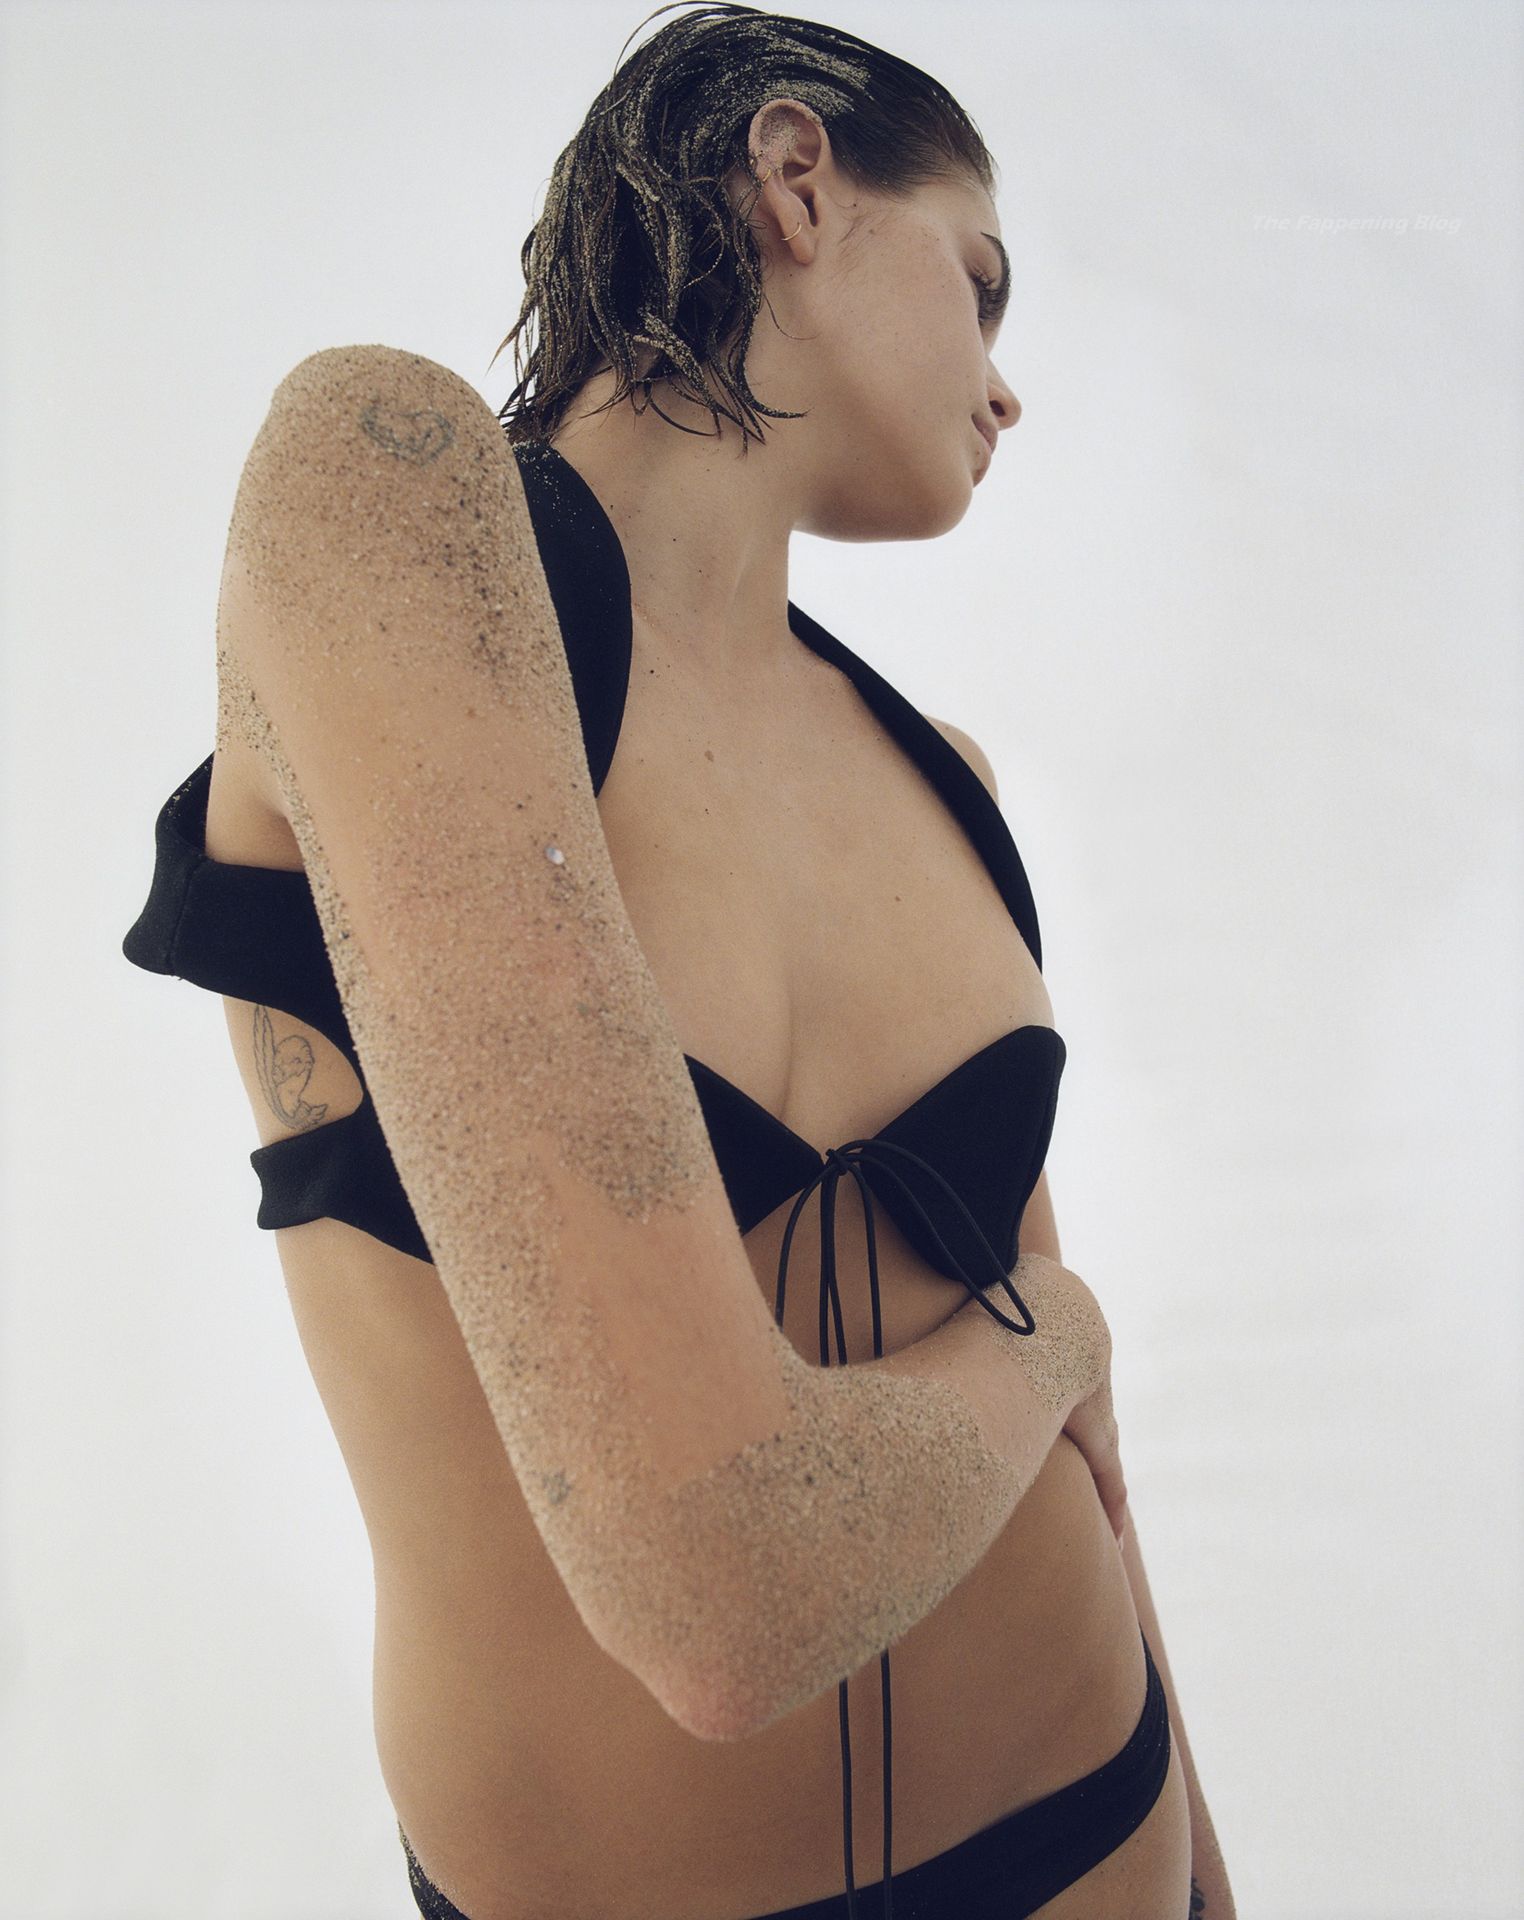 Kaia Gerber Nude & Sexy - i-D Magazine (14 Photos)